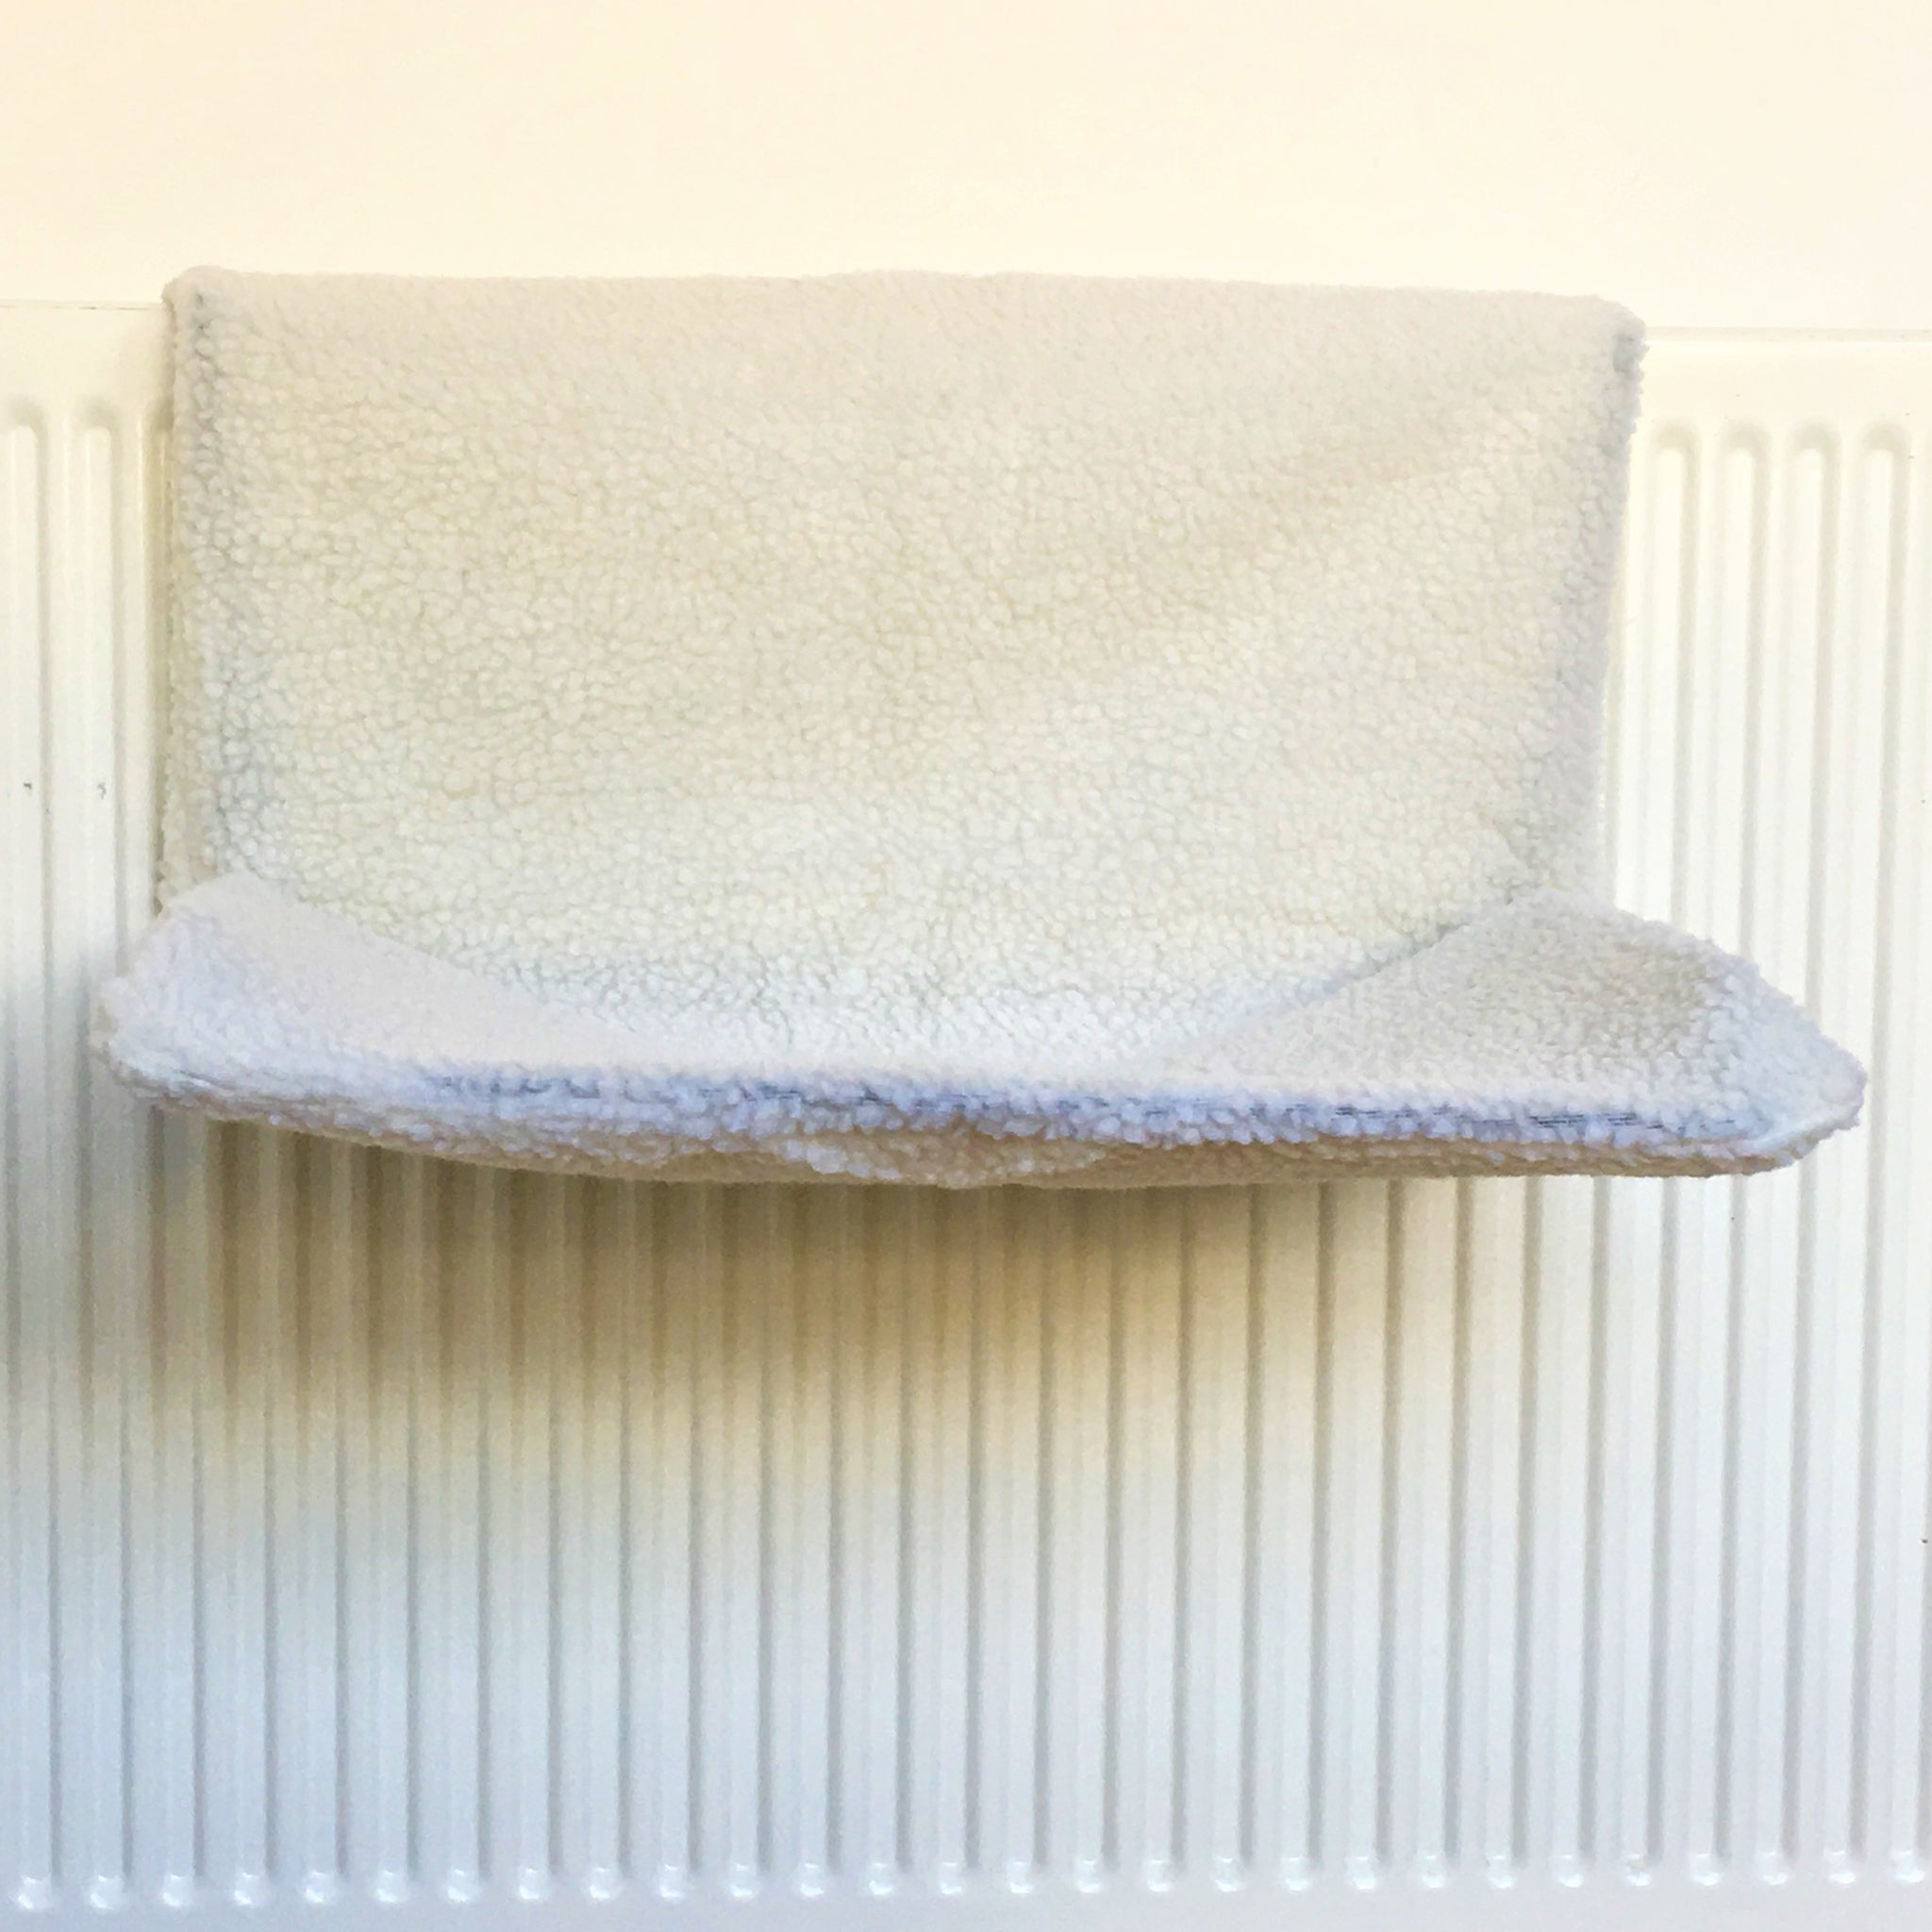 soft radiator airer for damp laundry